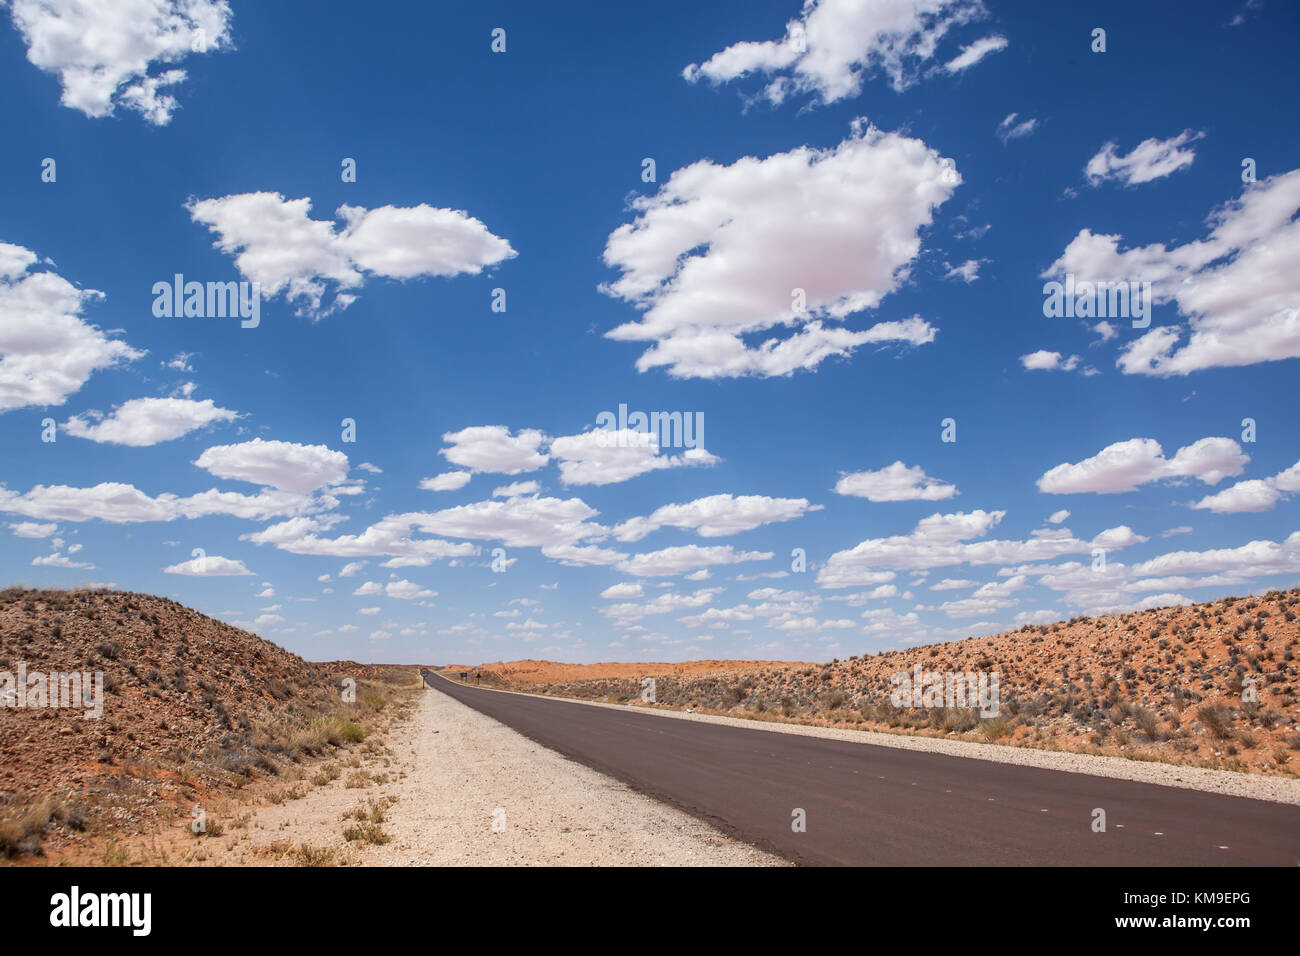 Road through Kgalagadi Transfrontier Park, South Africa Stock Photo